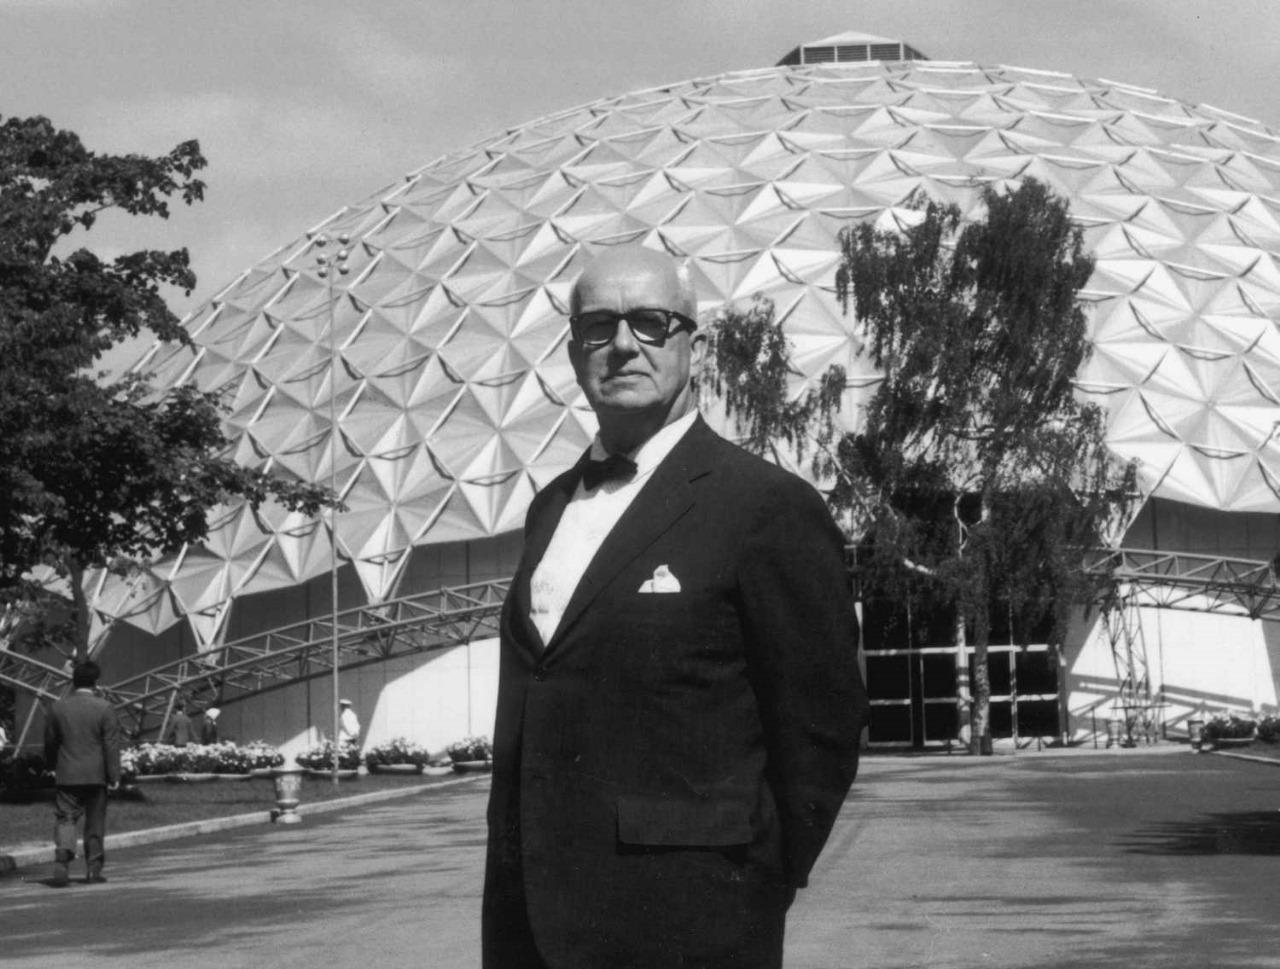 Buckminster Fuller's Geodesic Dome: An Iconic Architectural Creation | Archiinterio Magazine